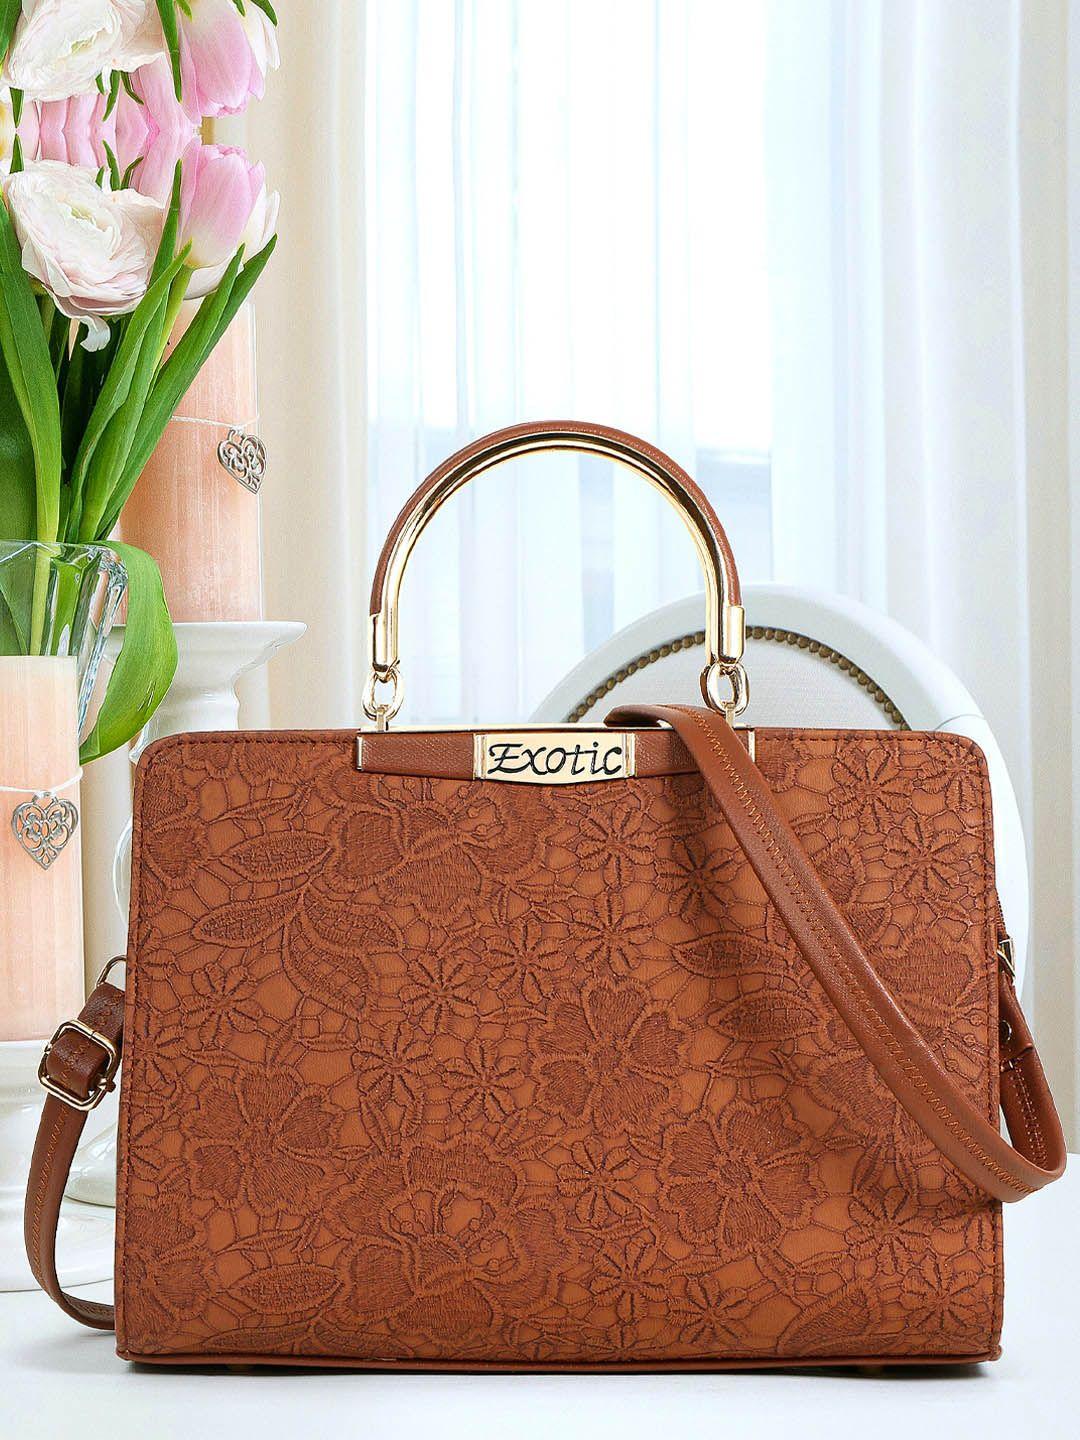 exotic tan pu shopper satchel with applique